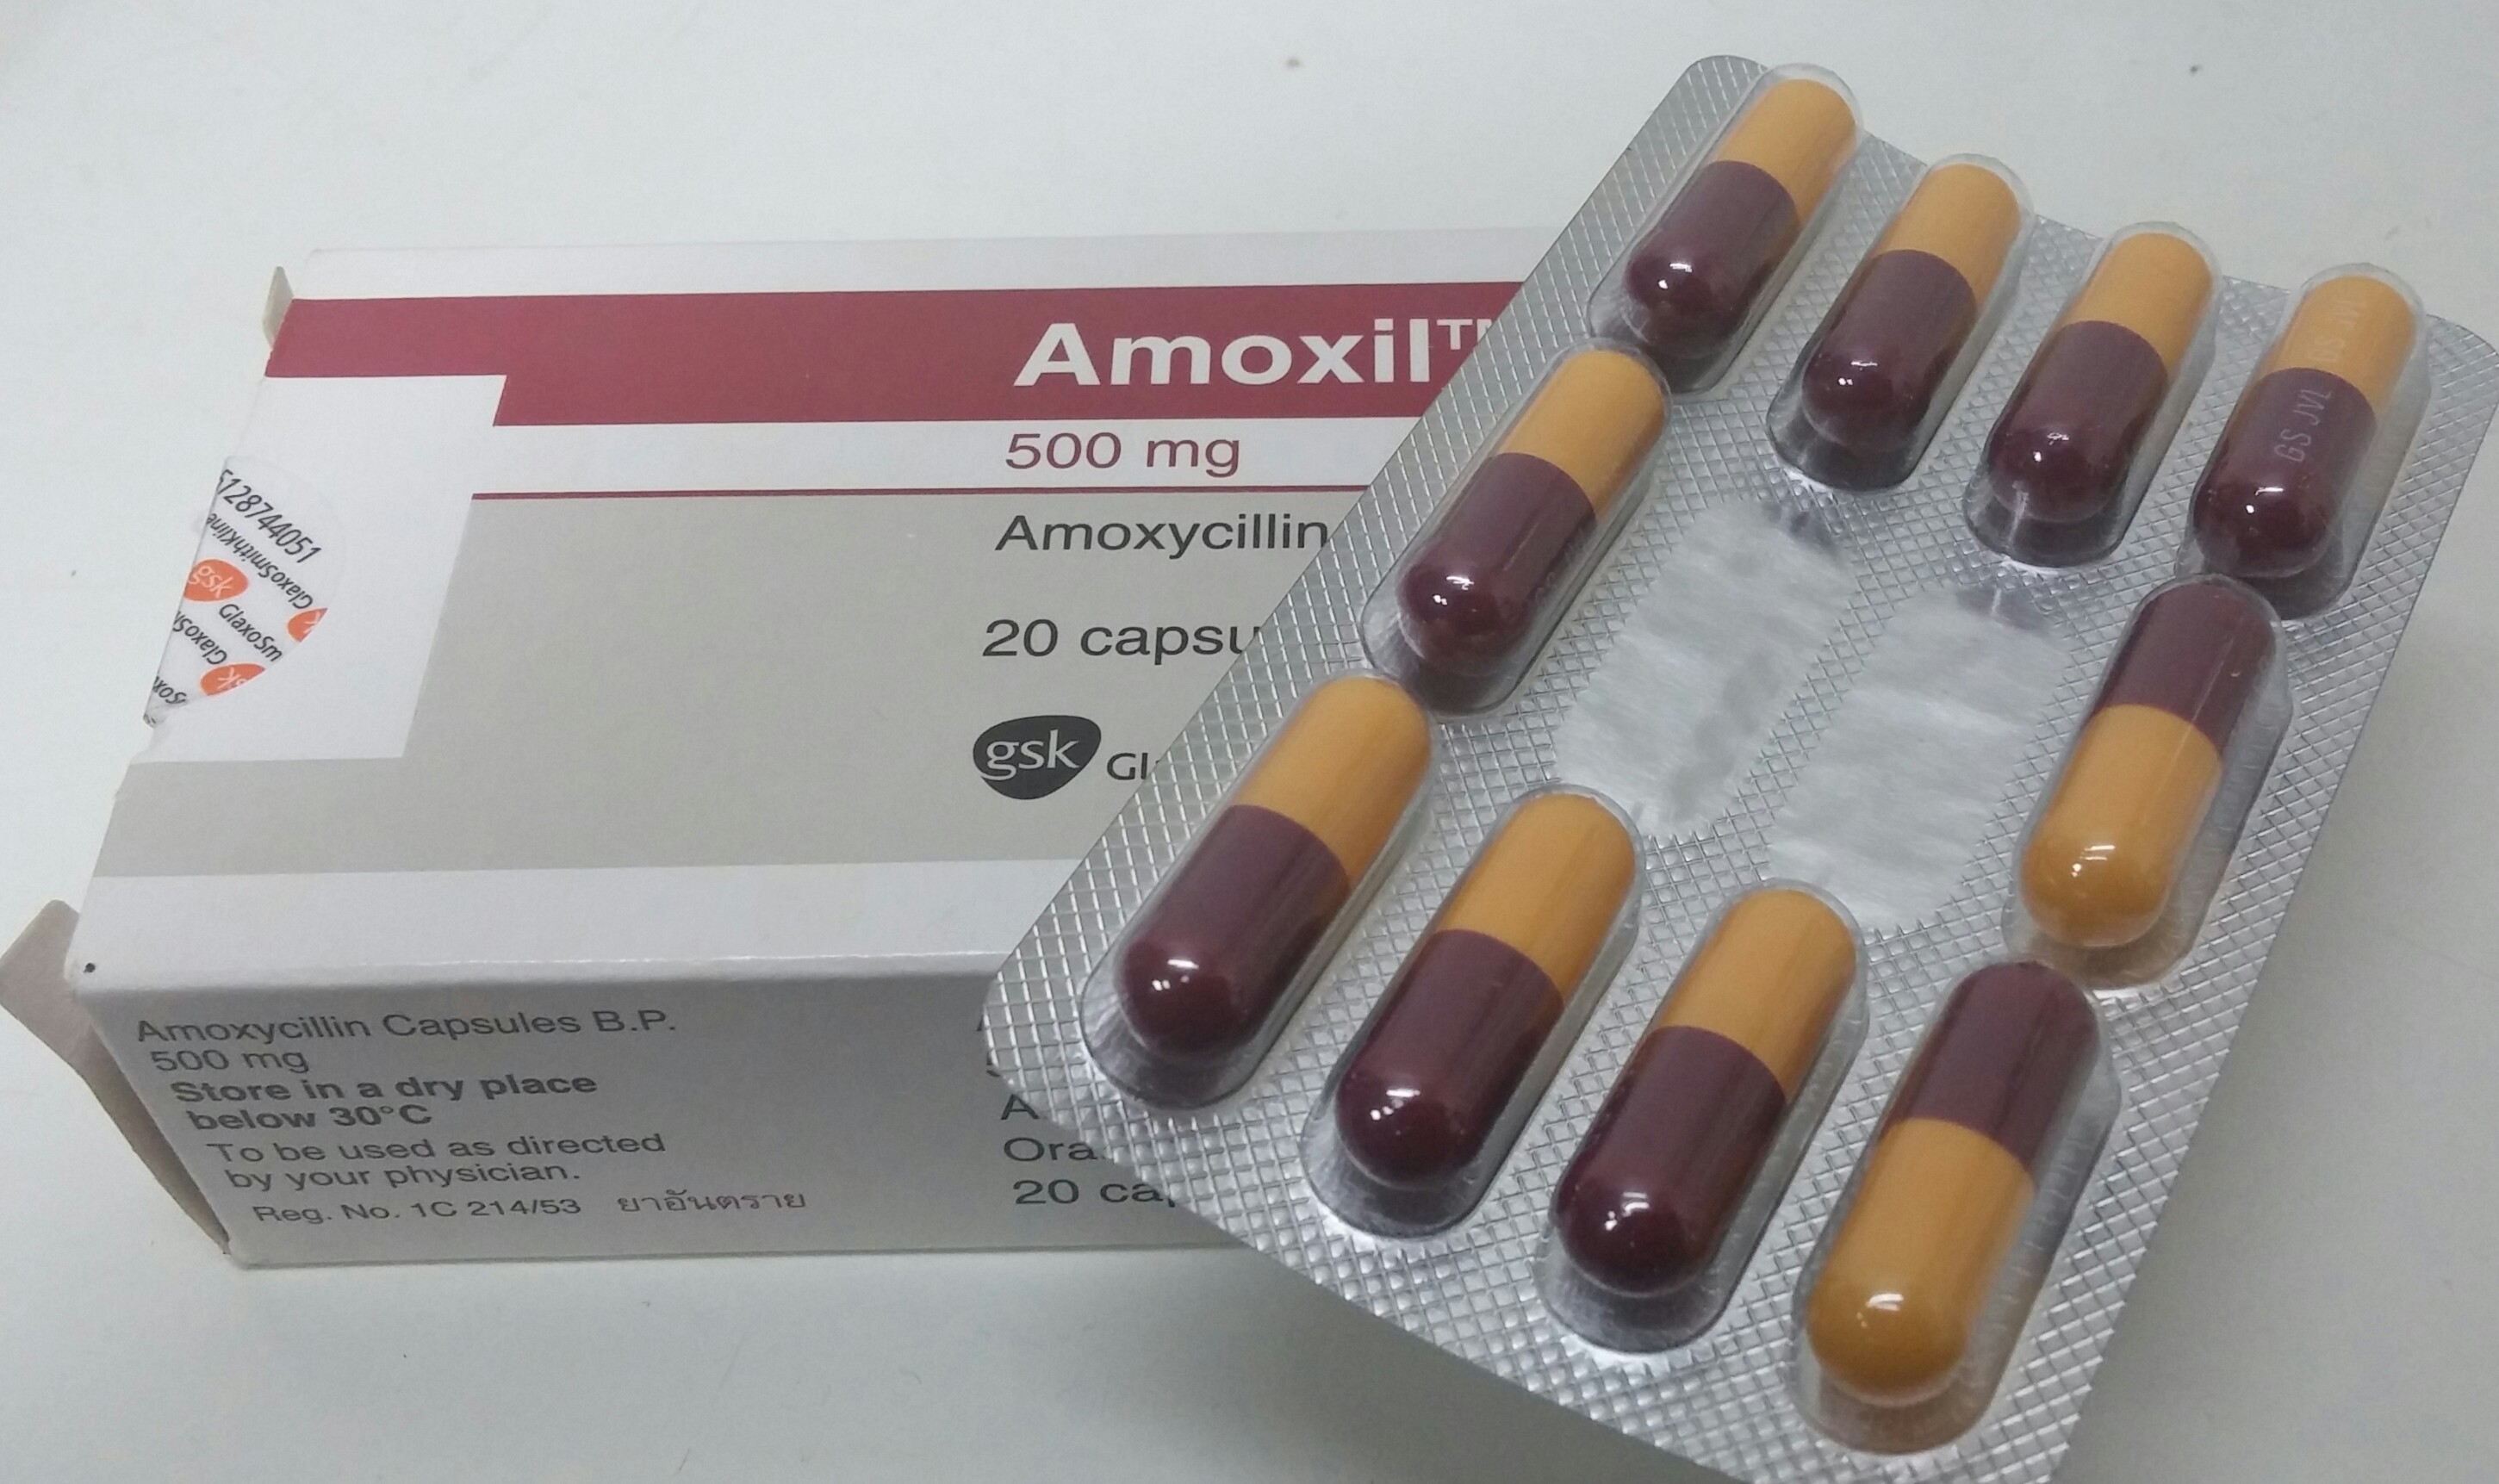 moxilin capsules 500 mg ยา อะไร tablet